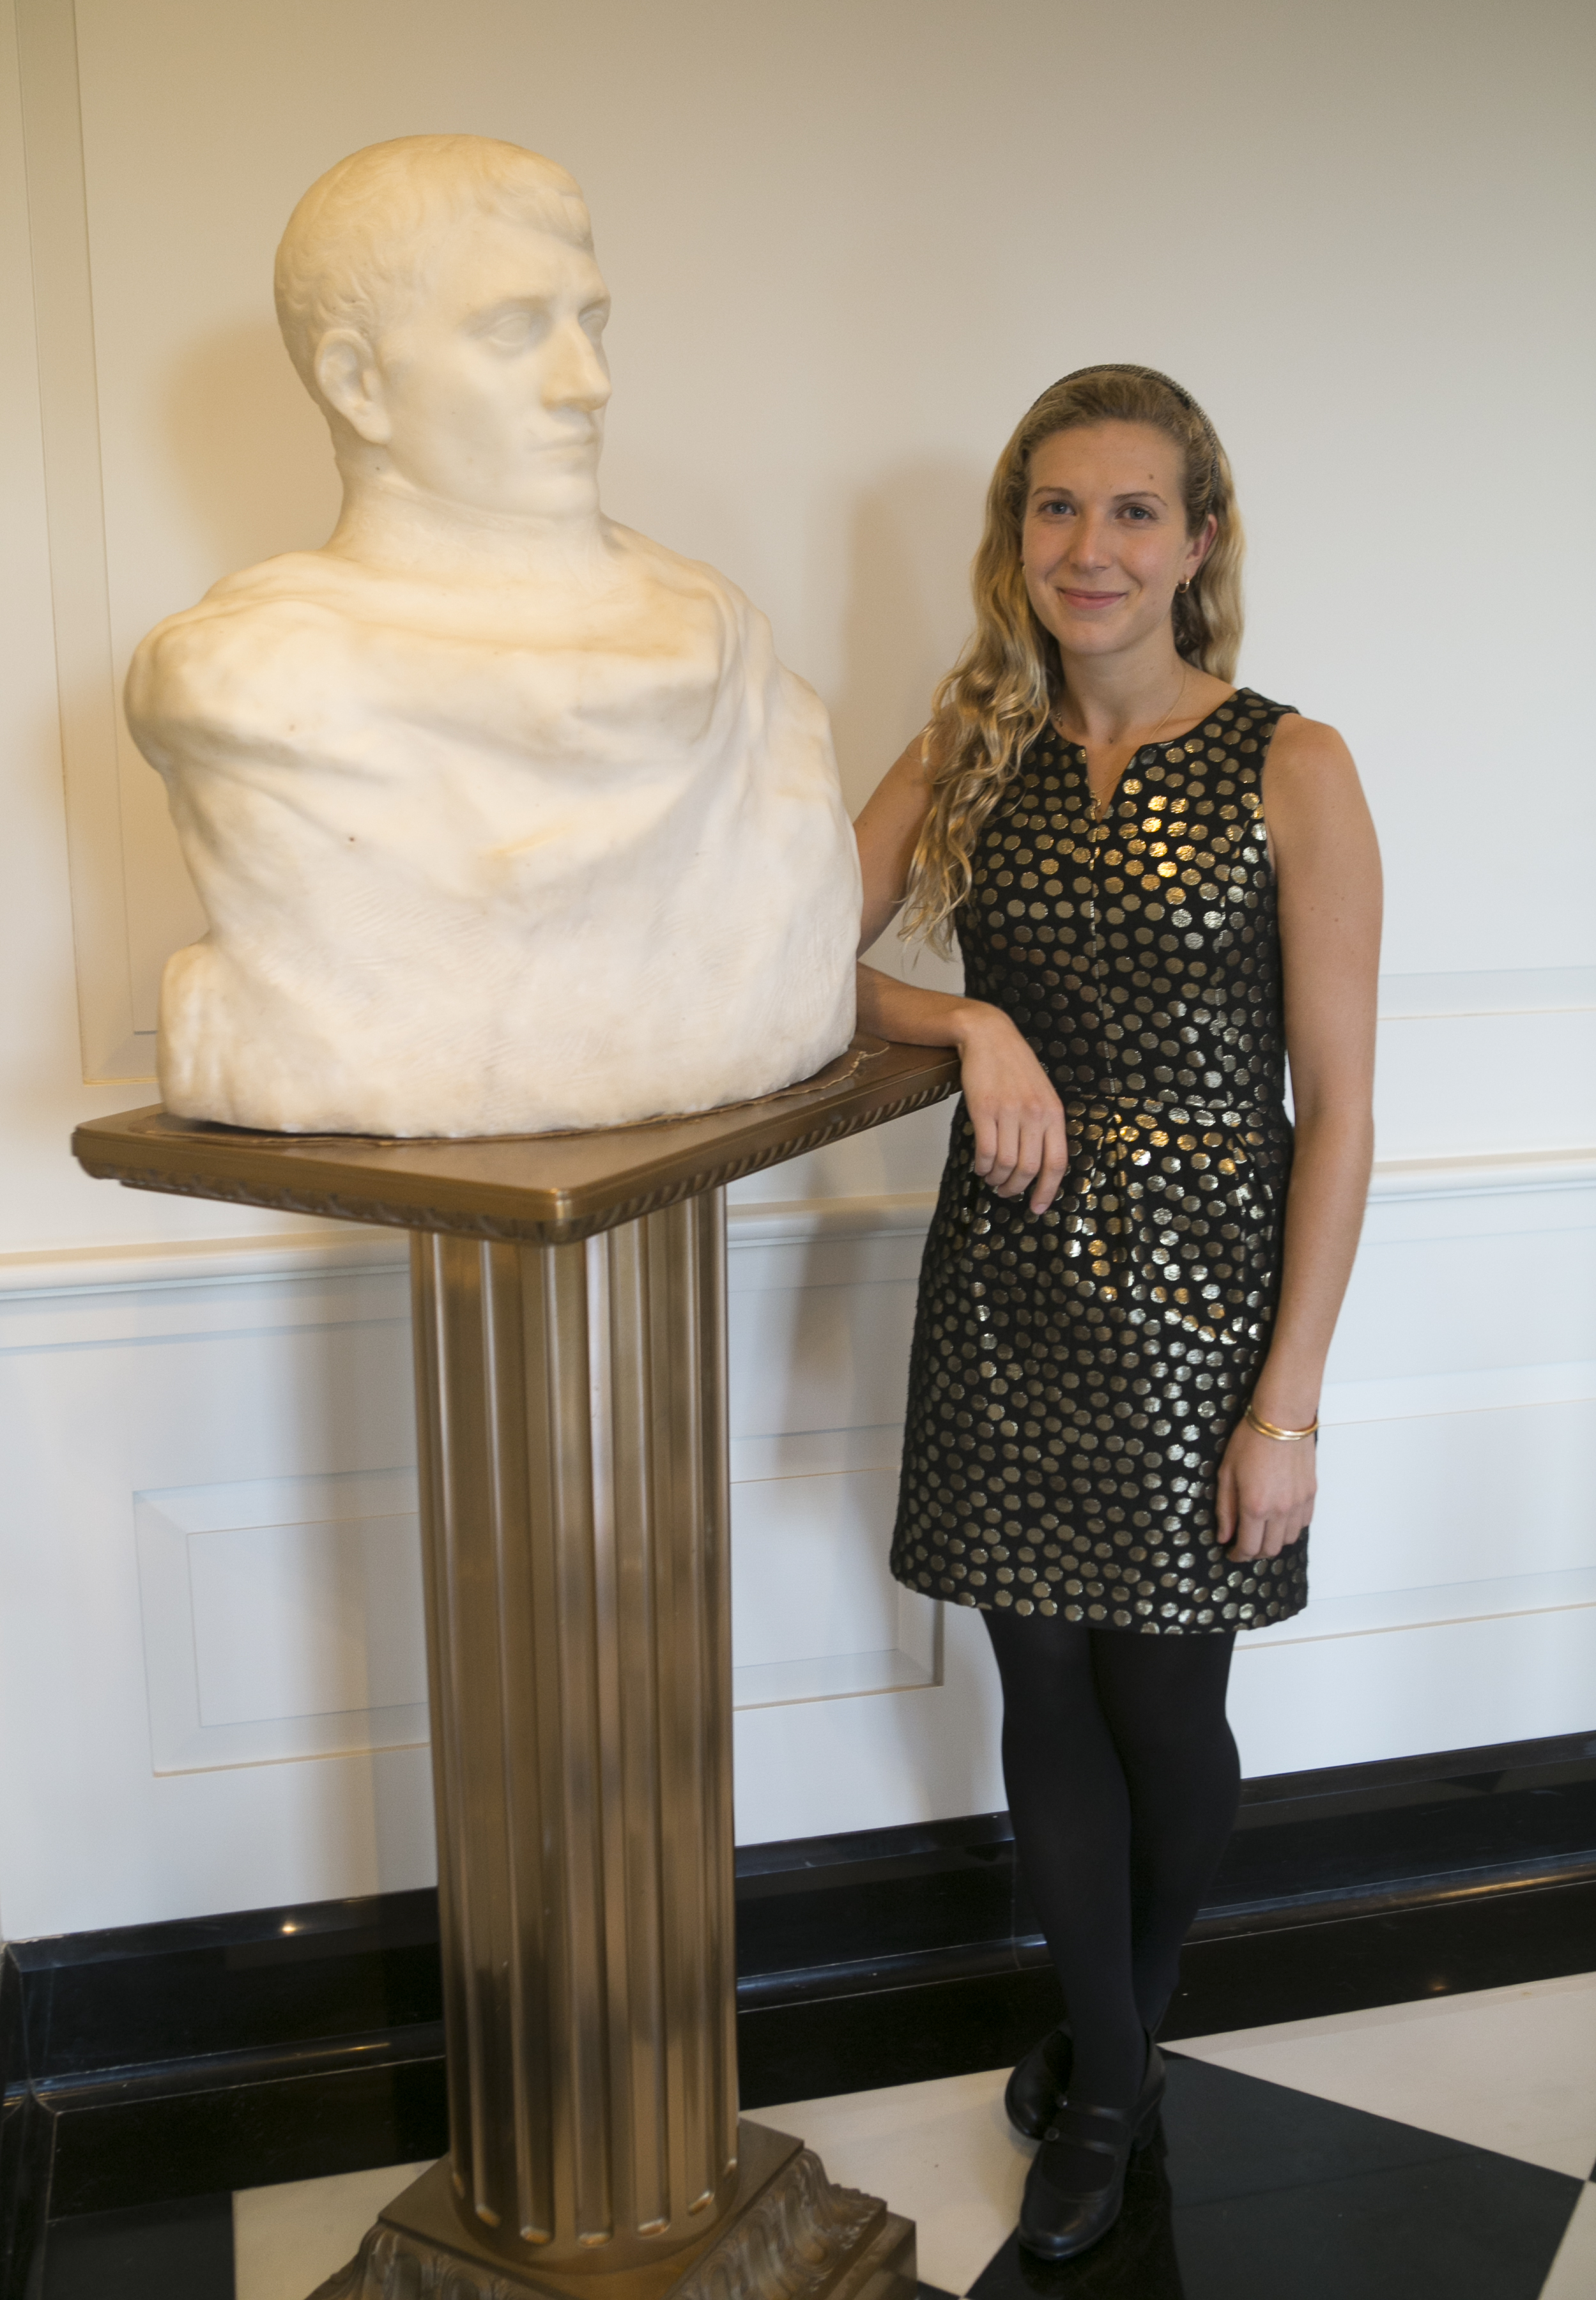 A photo of curator Mallory Mortillaro with the Rodin sculpture.